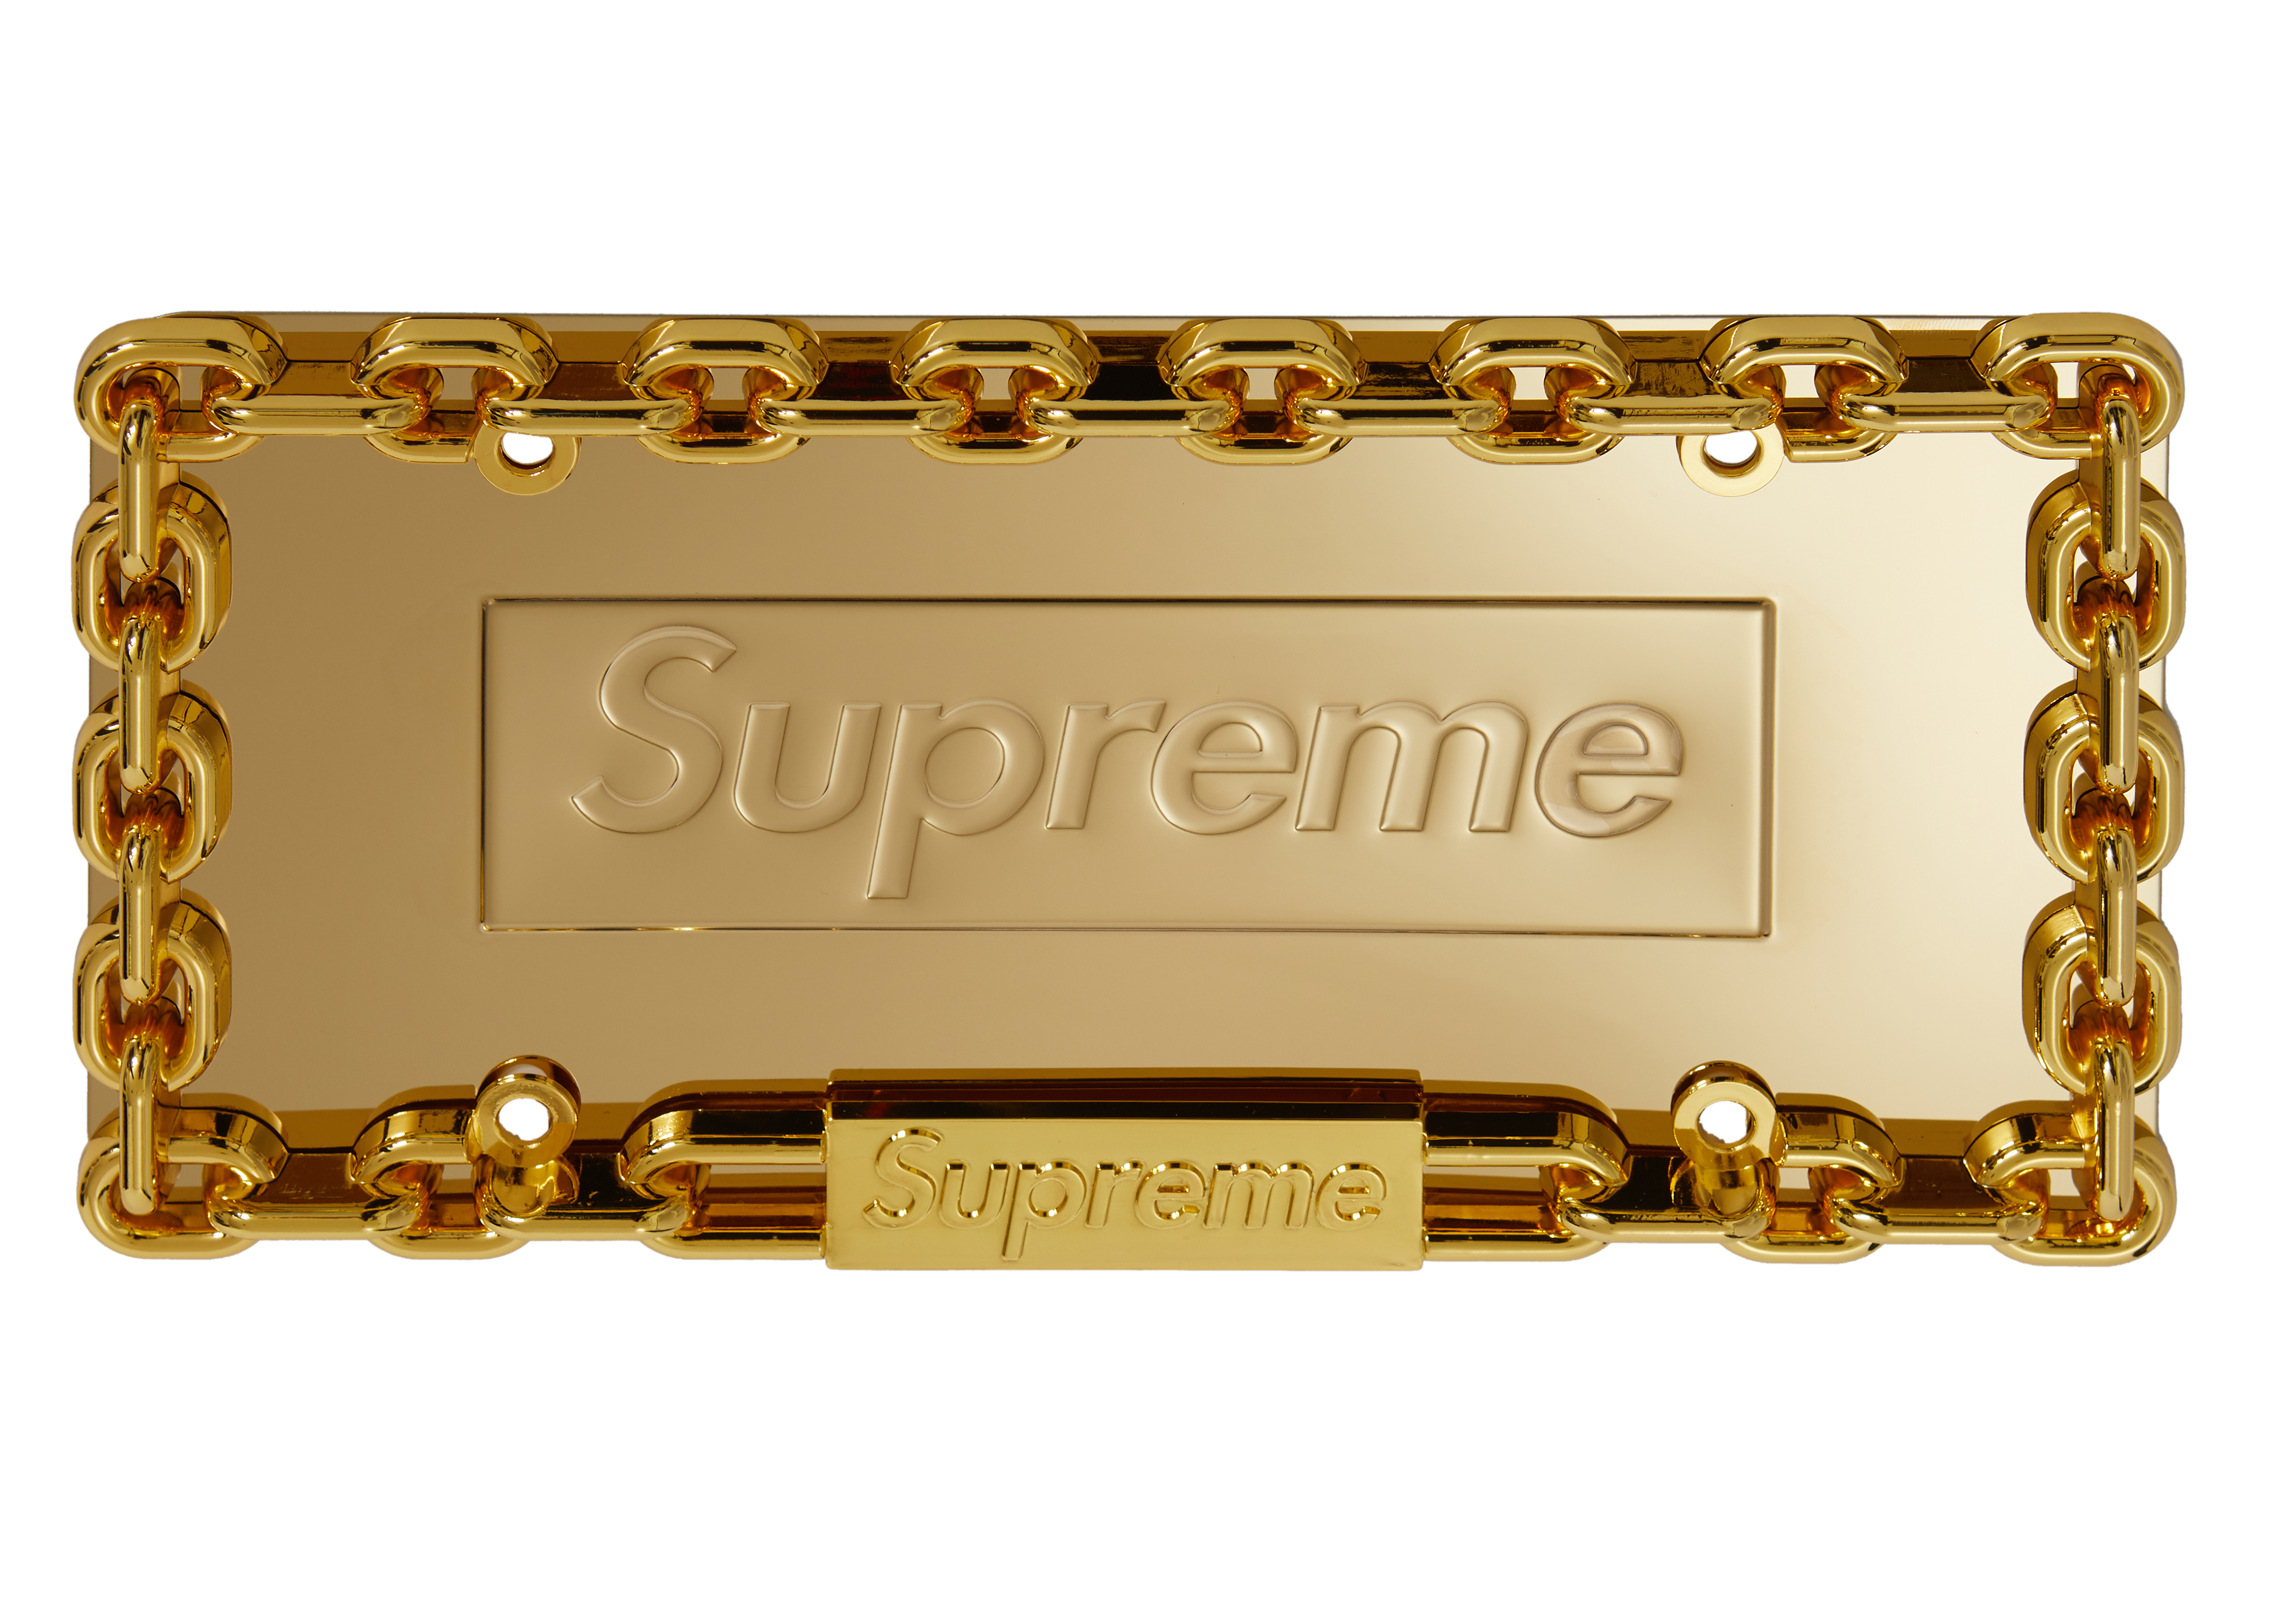 Supreme Chain License Plate Frame Gold